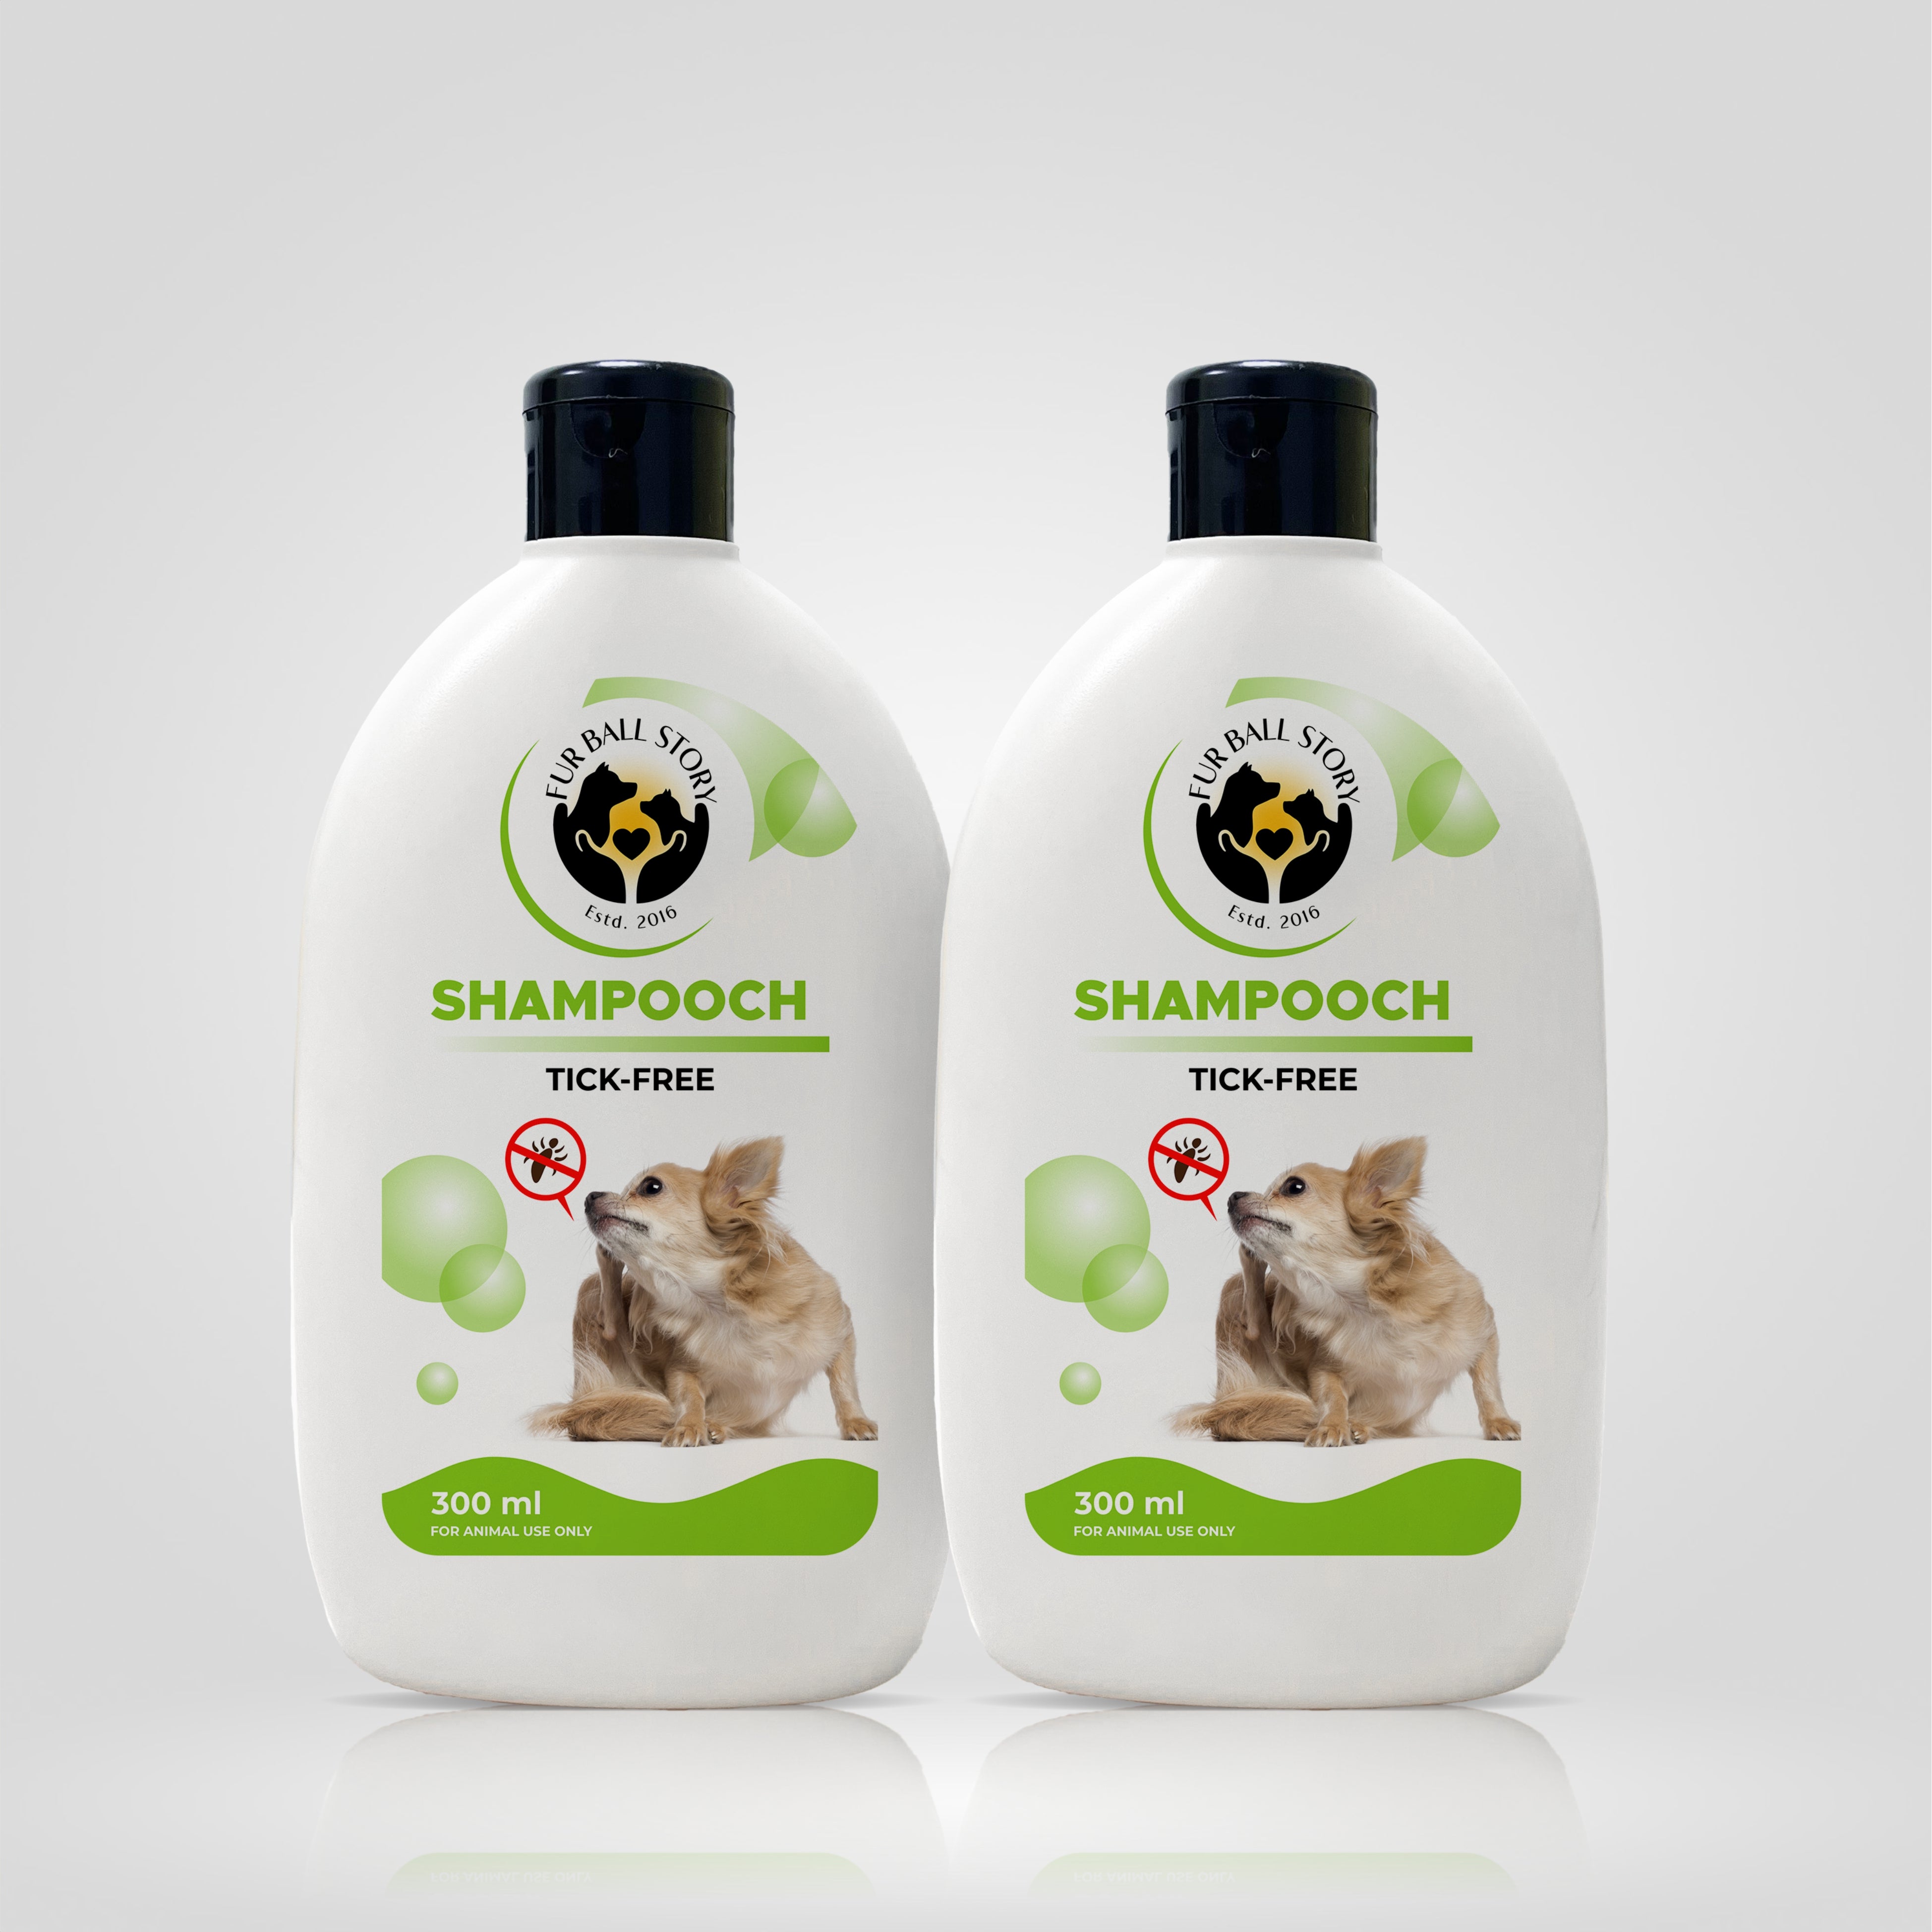 Shampooch Tick Free: Tick Preventive Shampoo For Dogs - 300ml 